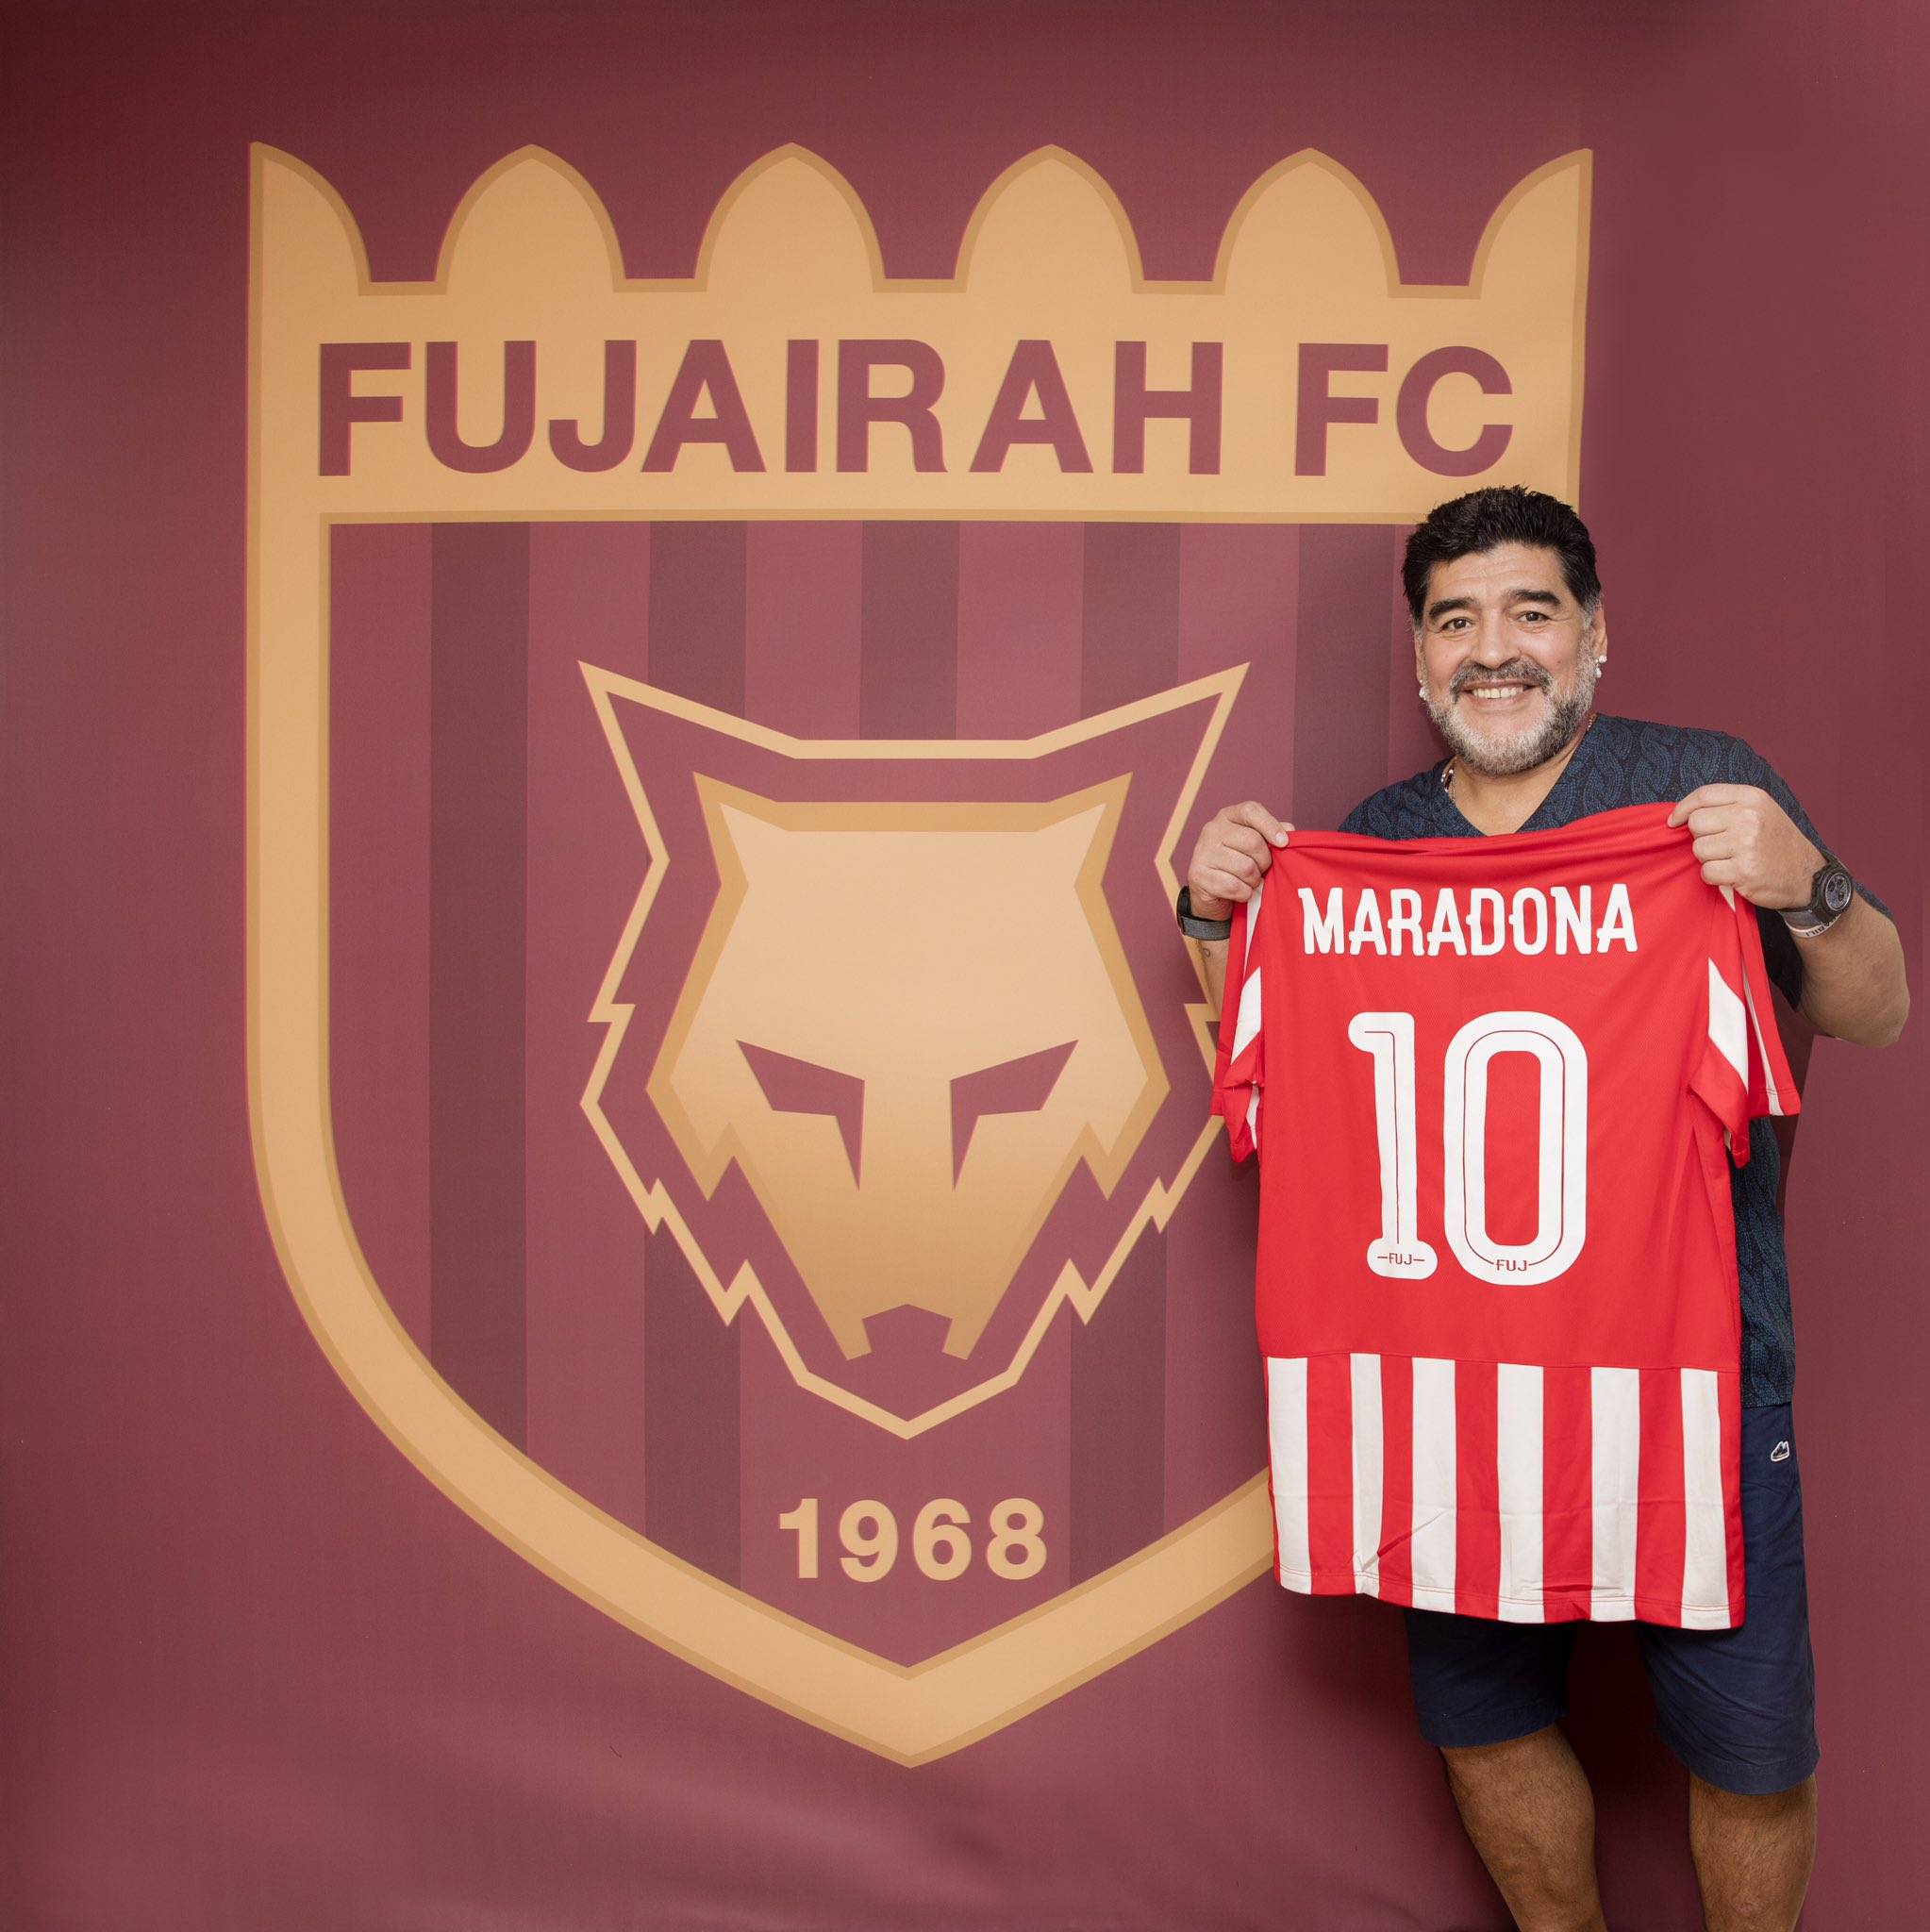 Diego Maradona’s contract with Al-Fujairah revealed